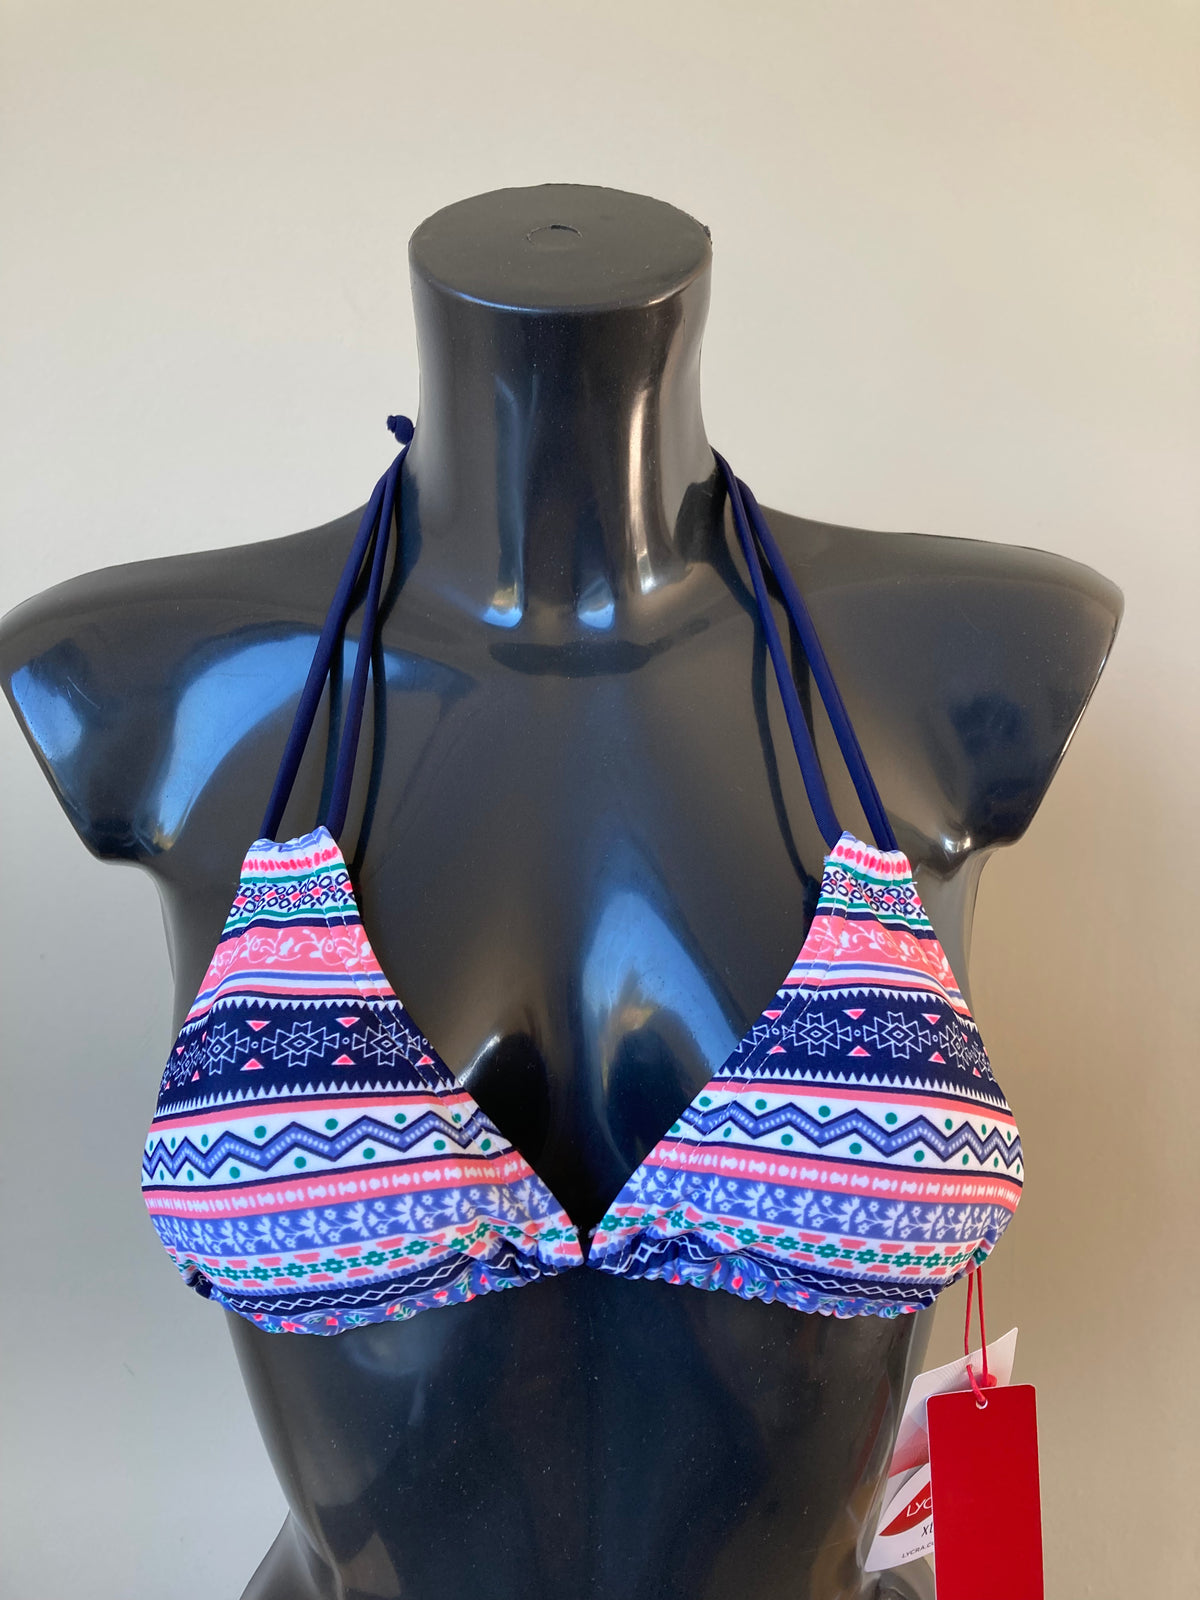 Triangle Bikini Top by S.OLIVER - Size 8A/B